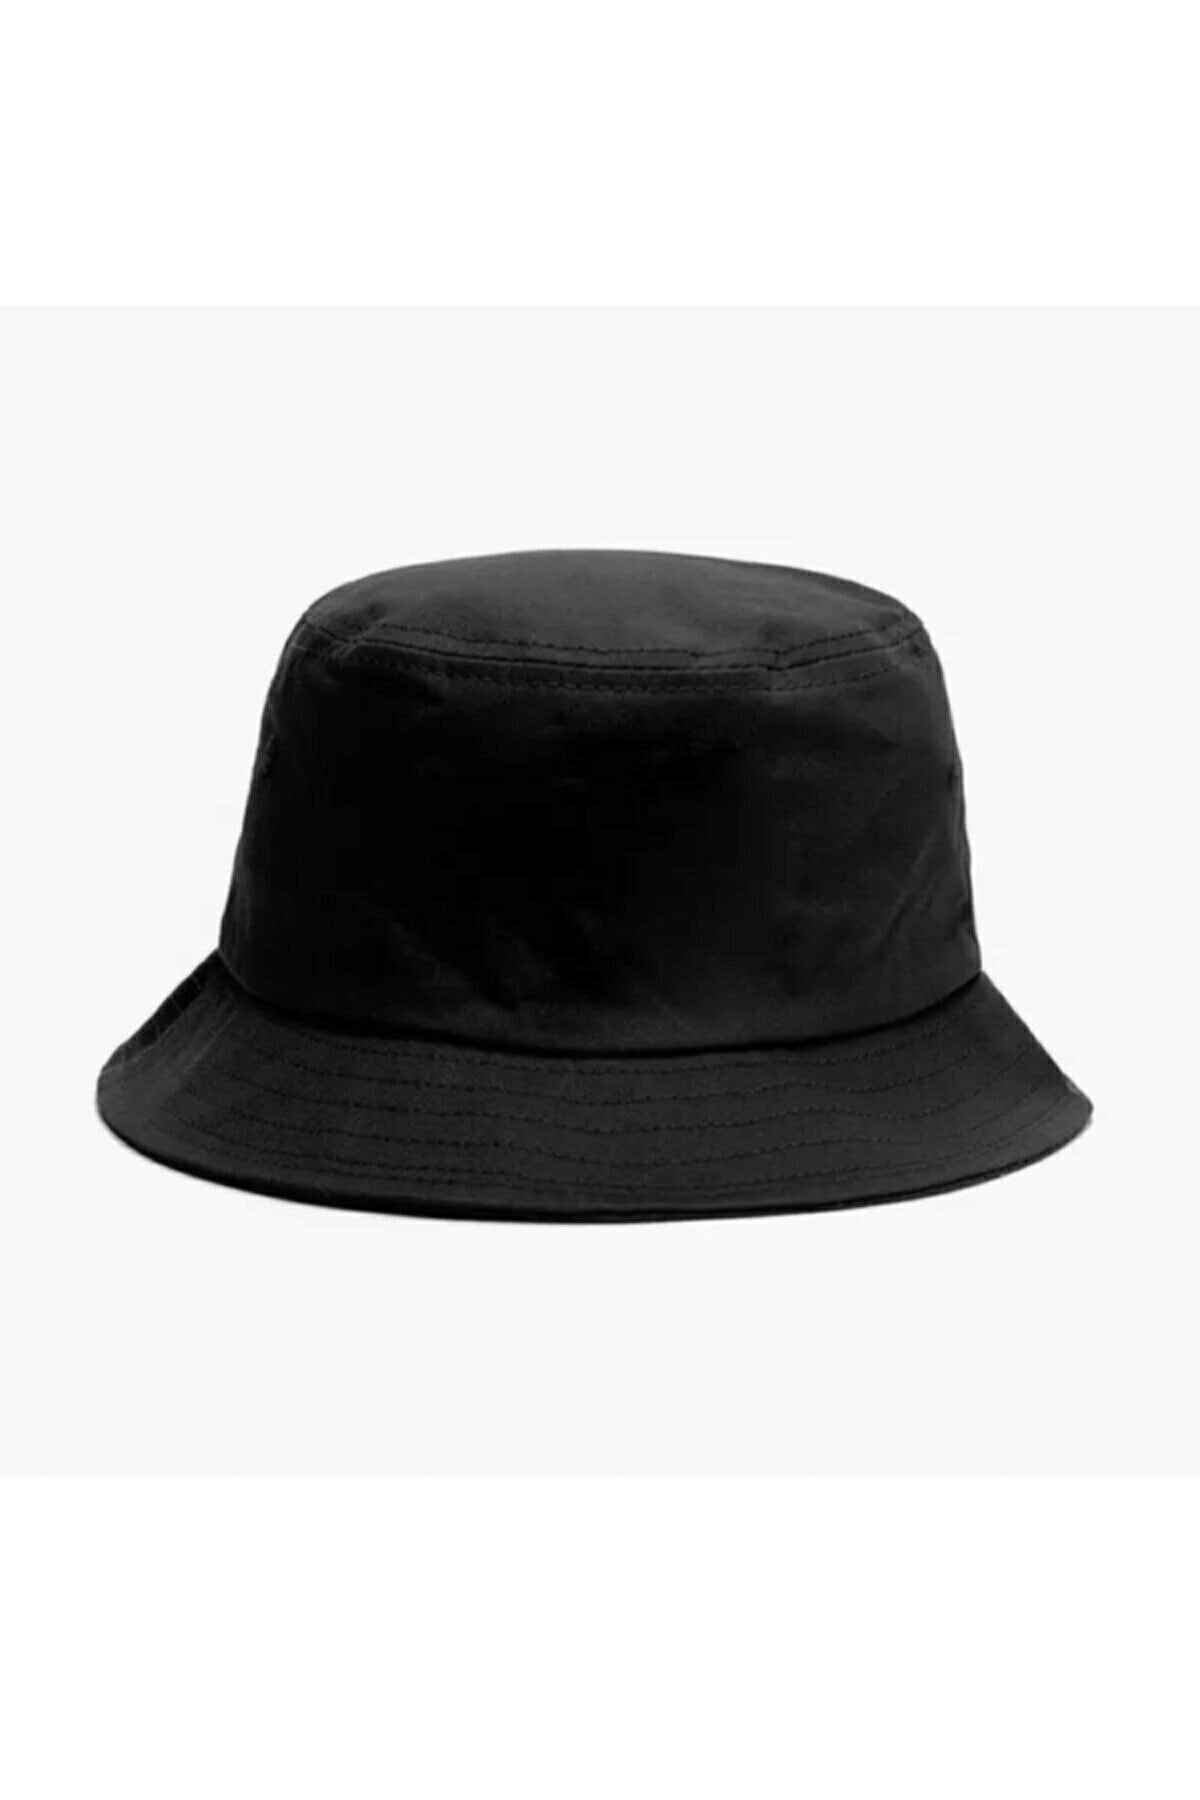 BY SCK Düz Siyah Kova Şapka Balıkçı Şapka Bucket Şapka